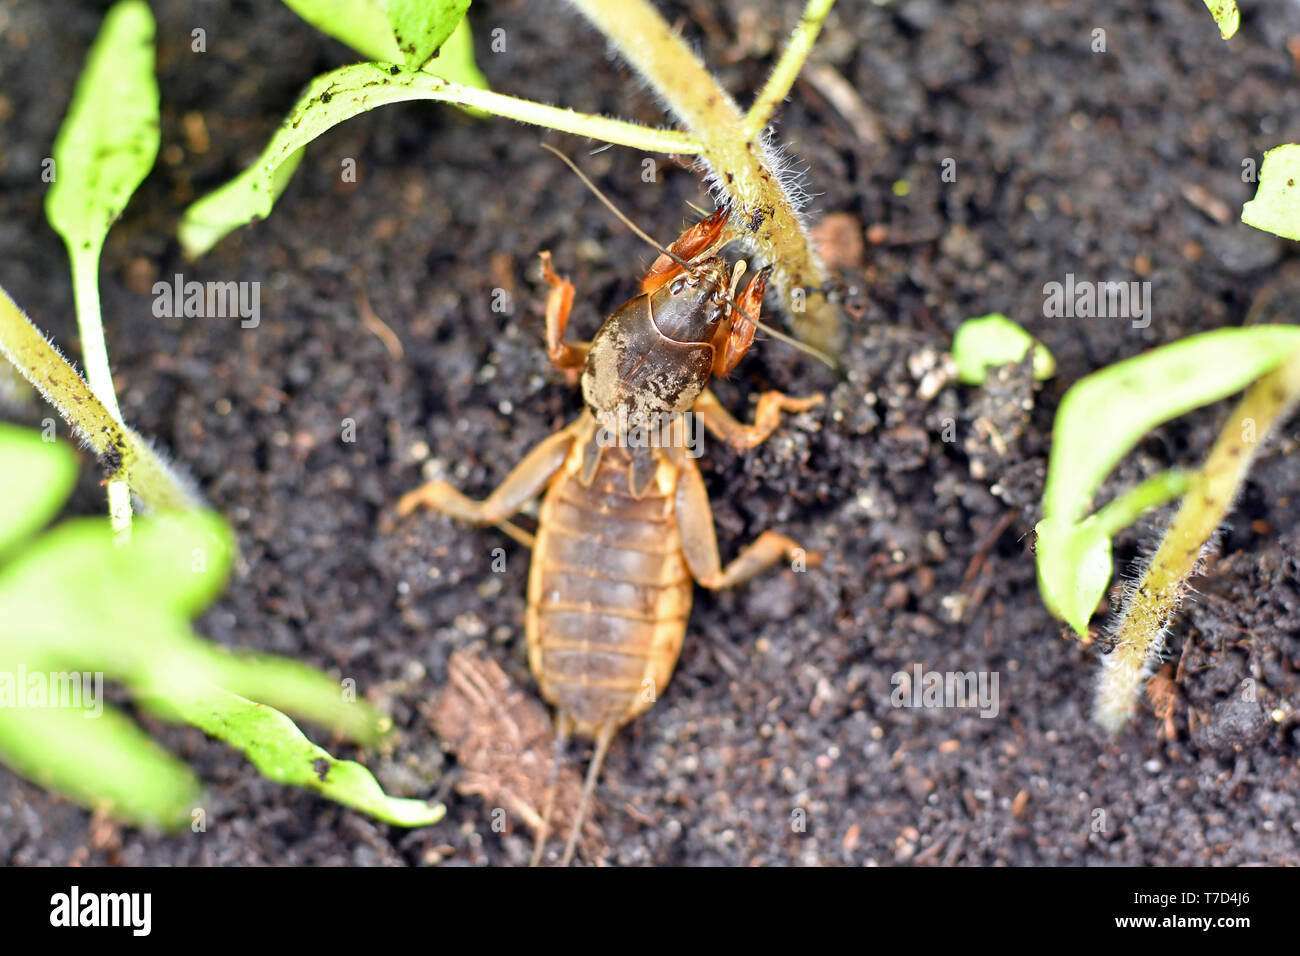 Mole cricket, eating a young tomato plant Stock Photo